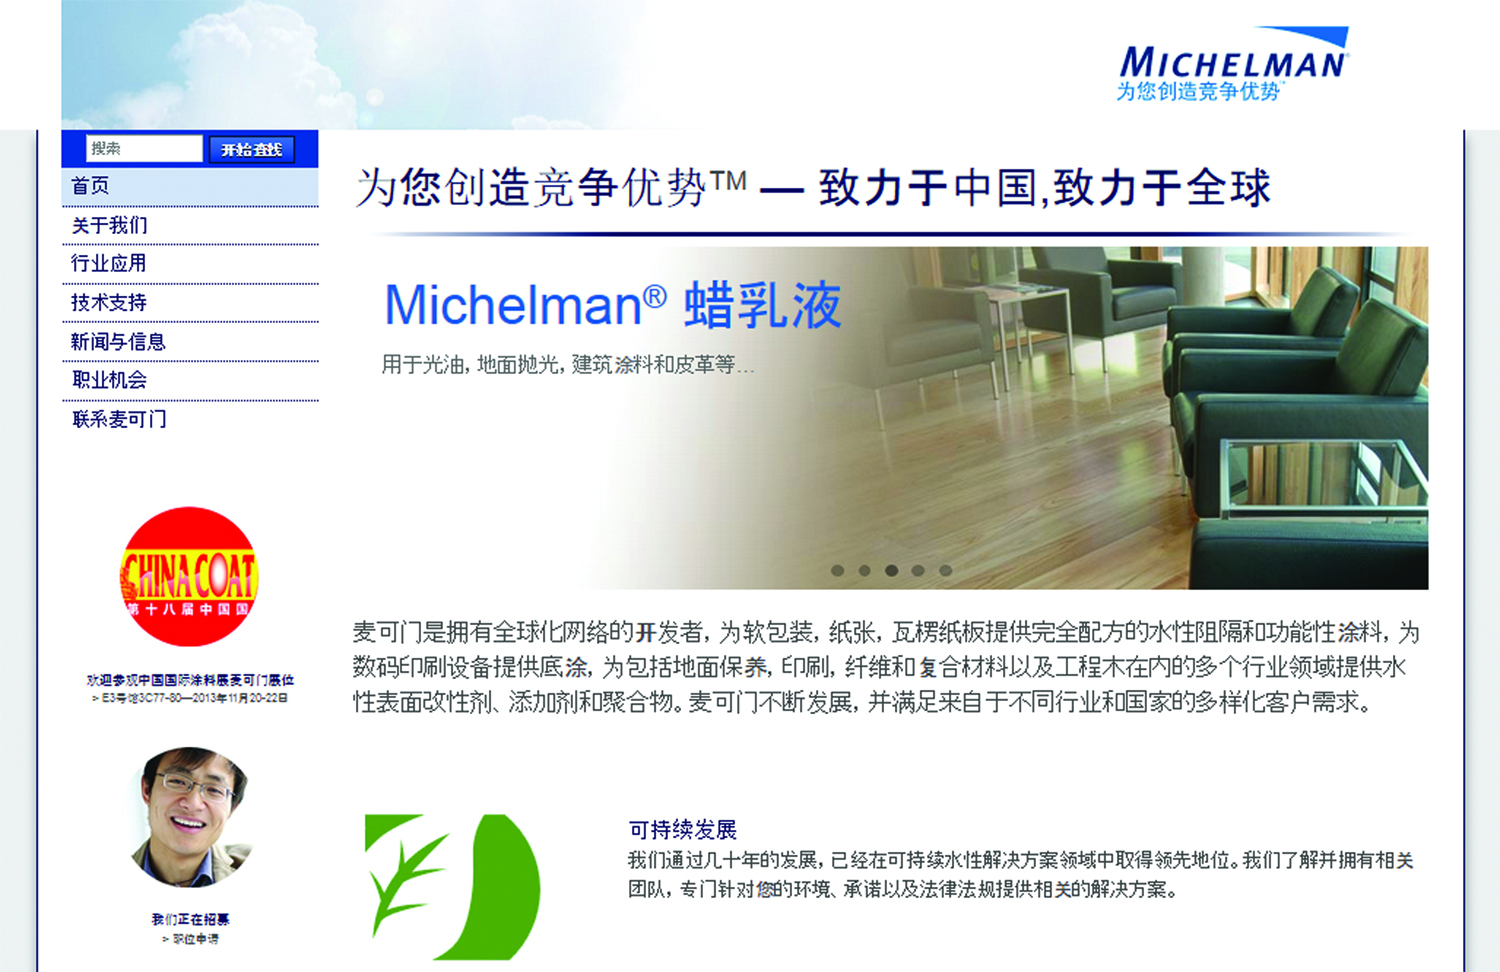 Michelman China Website Image